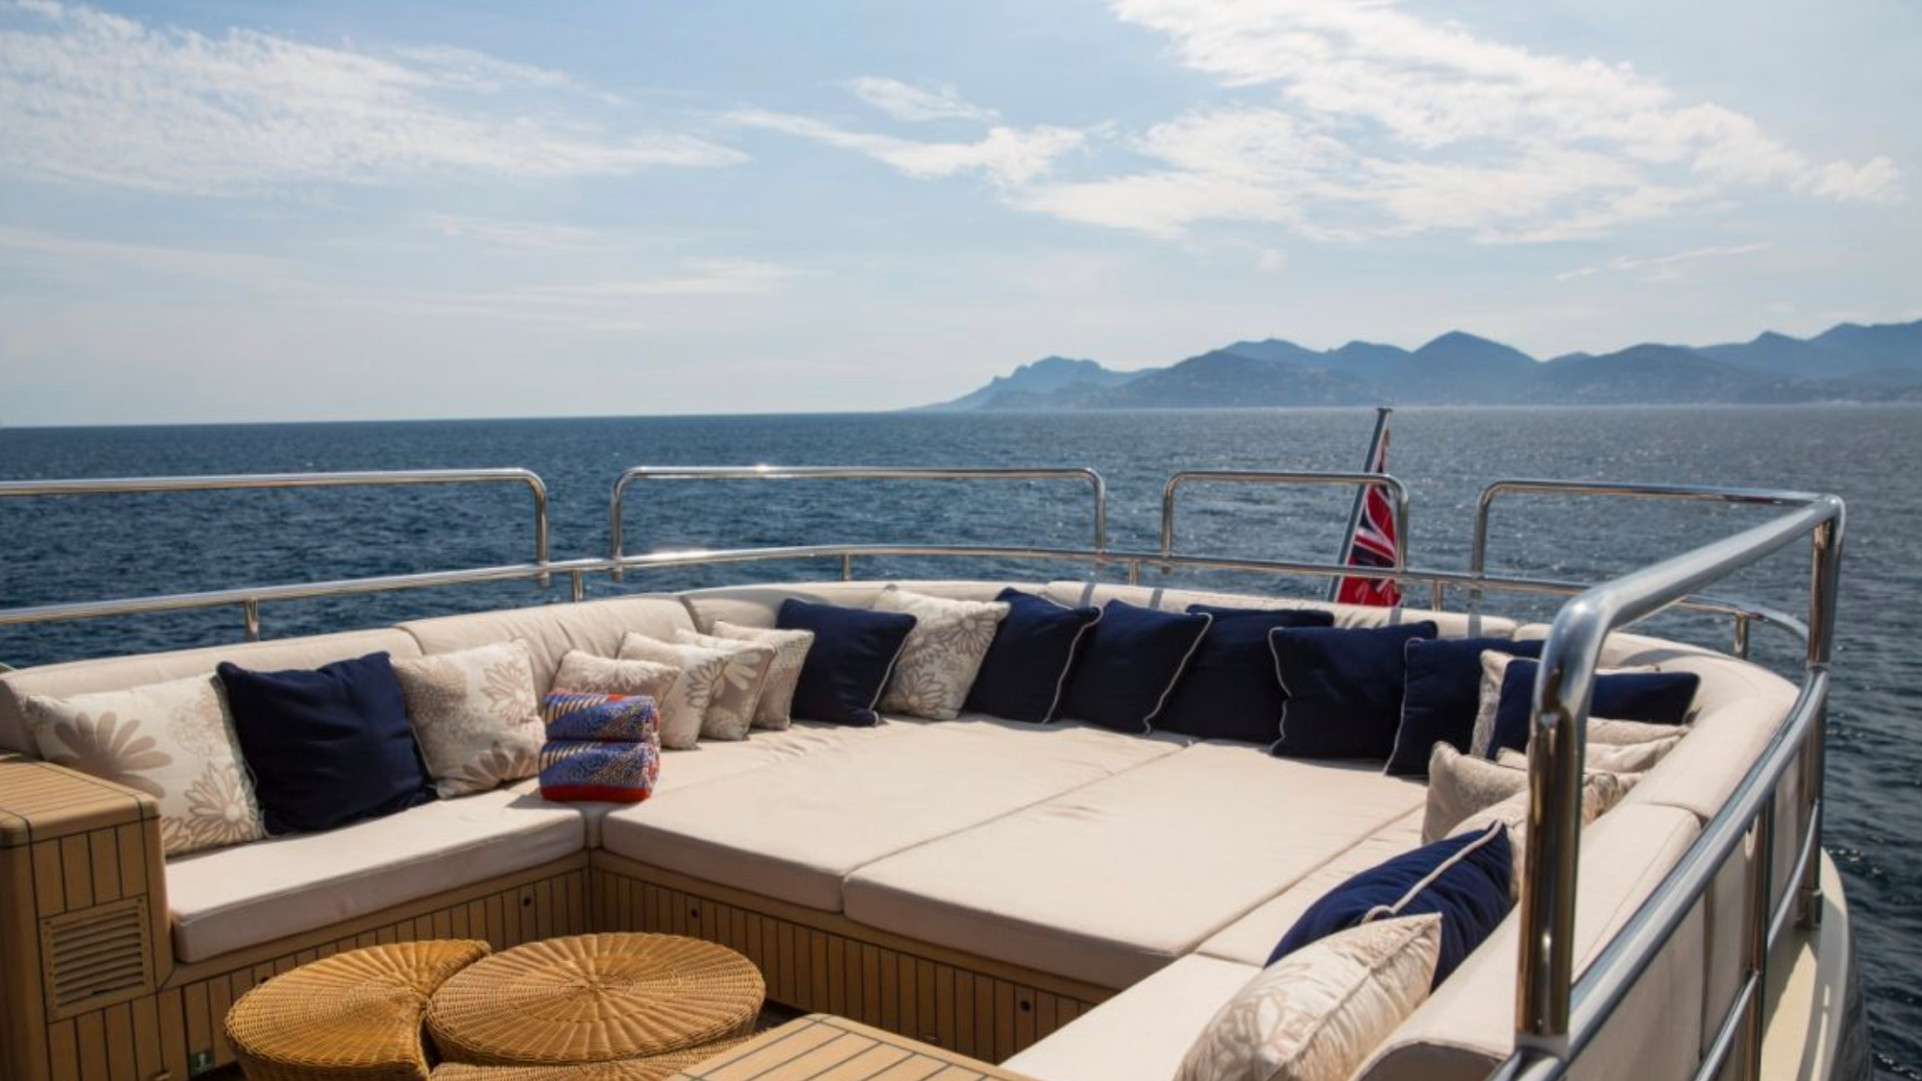 YCM 120 - Superyacht charter US Virgin Islands & Boat hire in Riviera, Corsica, Sardinia, Spain, Balearics, Caribbean 5